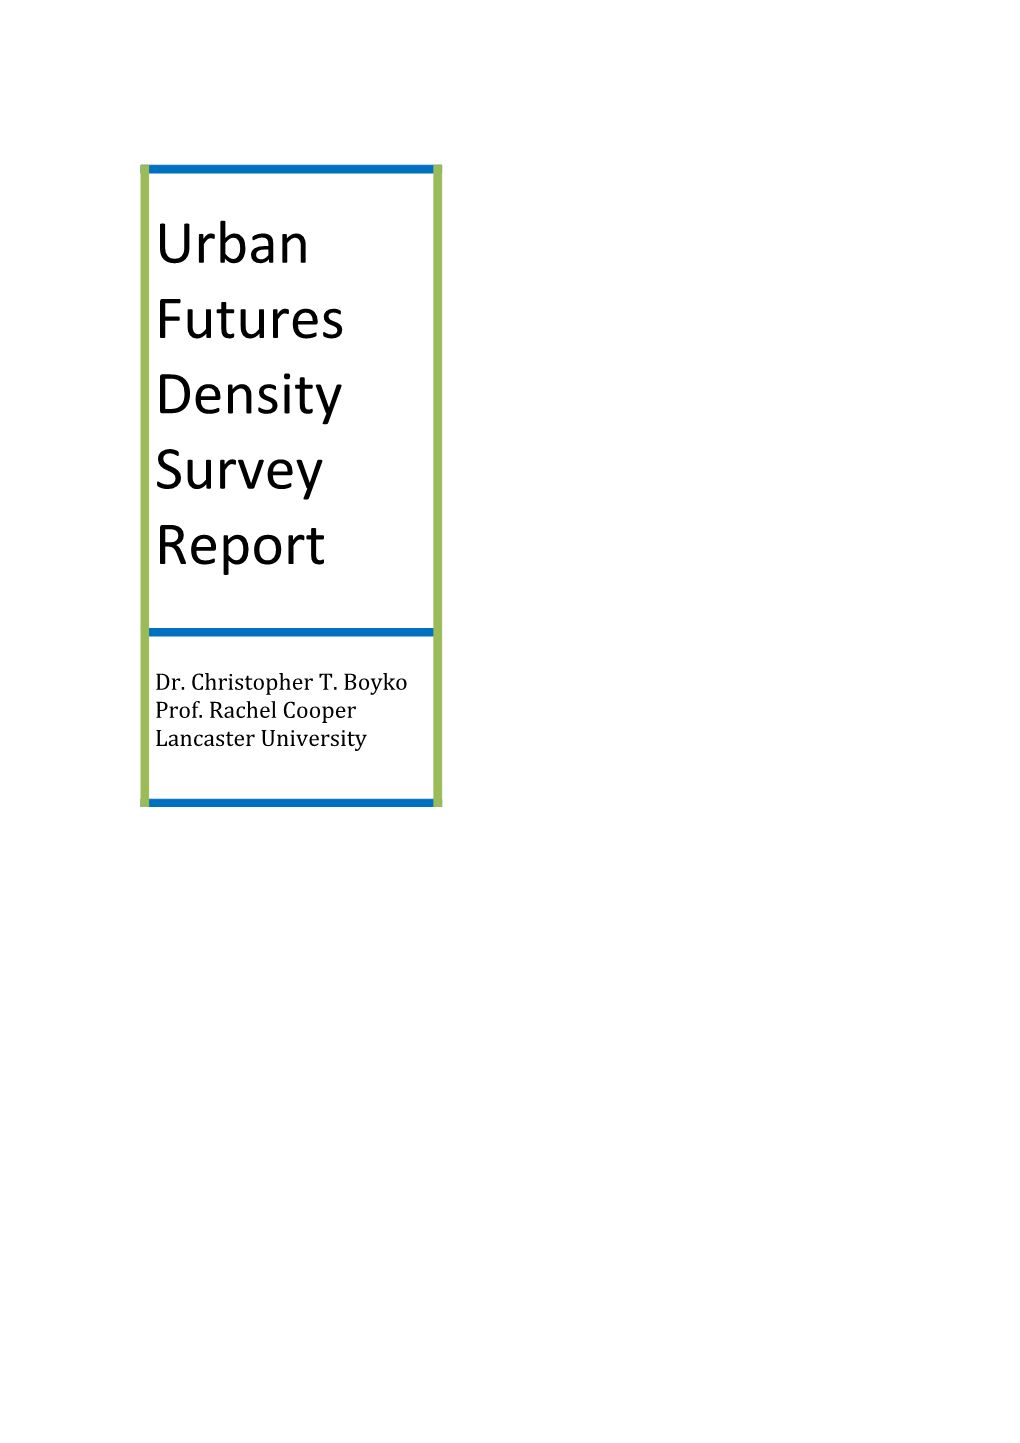 Urban Futures Density Survey Report